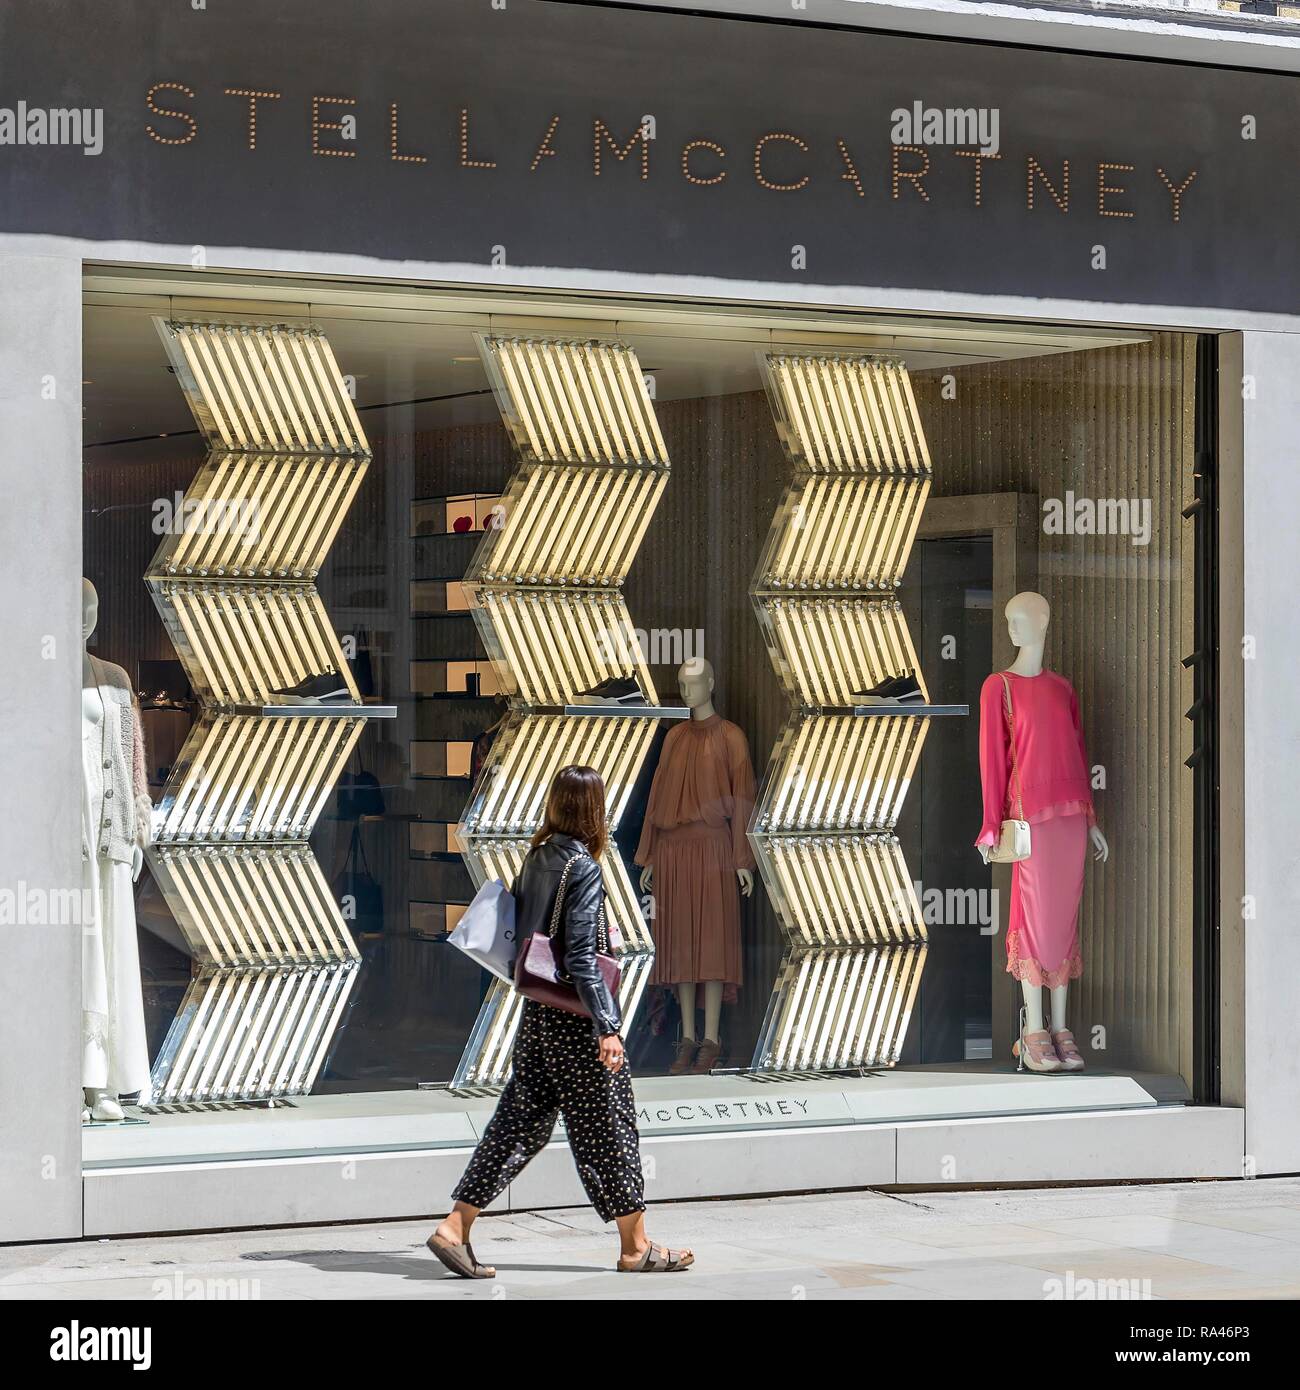 Passer-by in front of shop window, fashion shop Stella Mc Cartney, London, United Kingdom Stock Photo